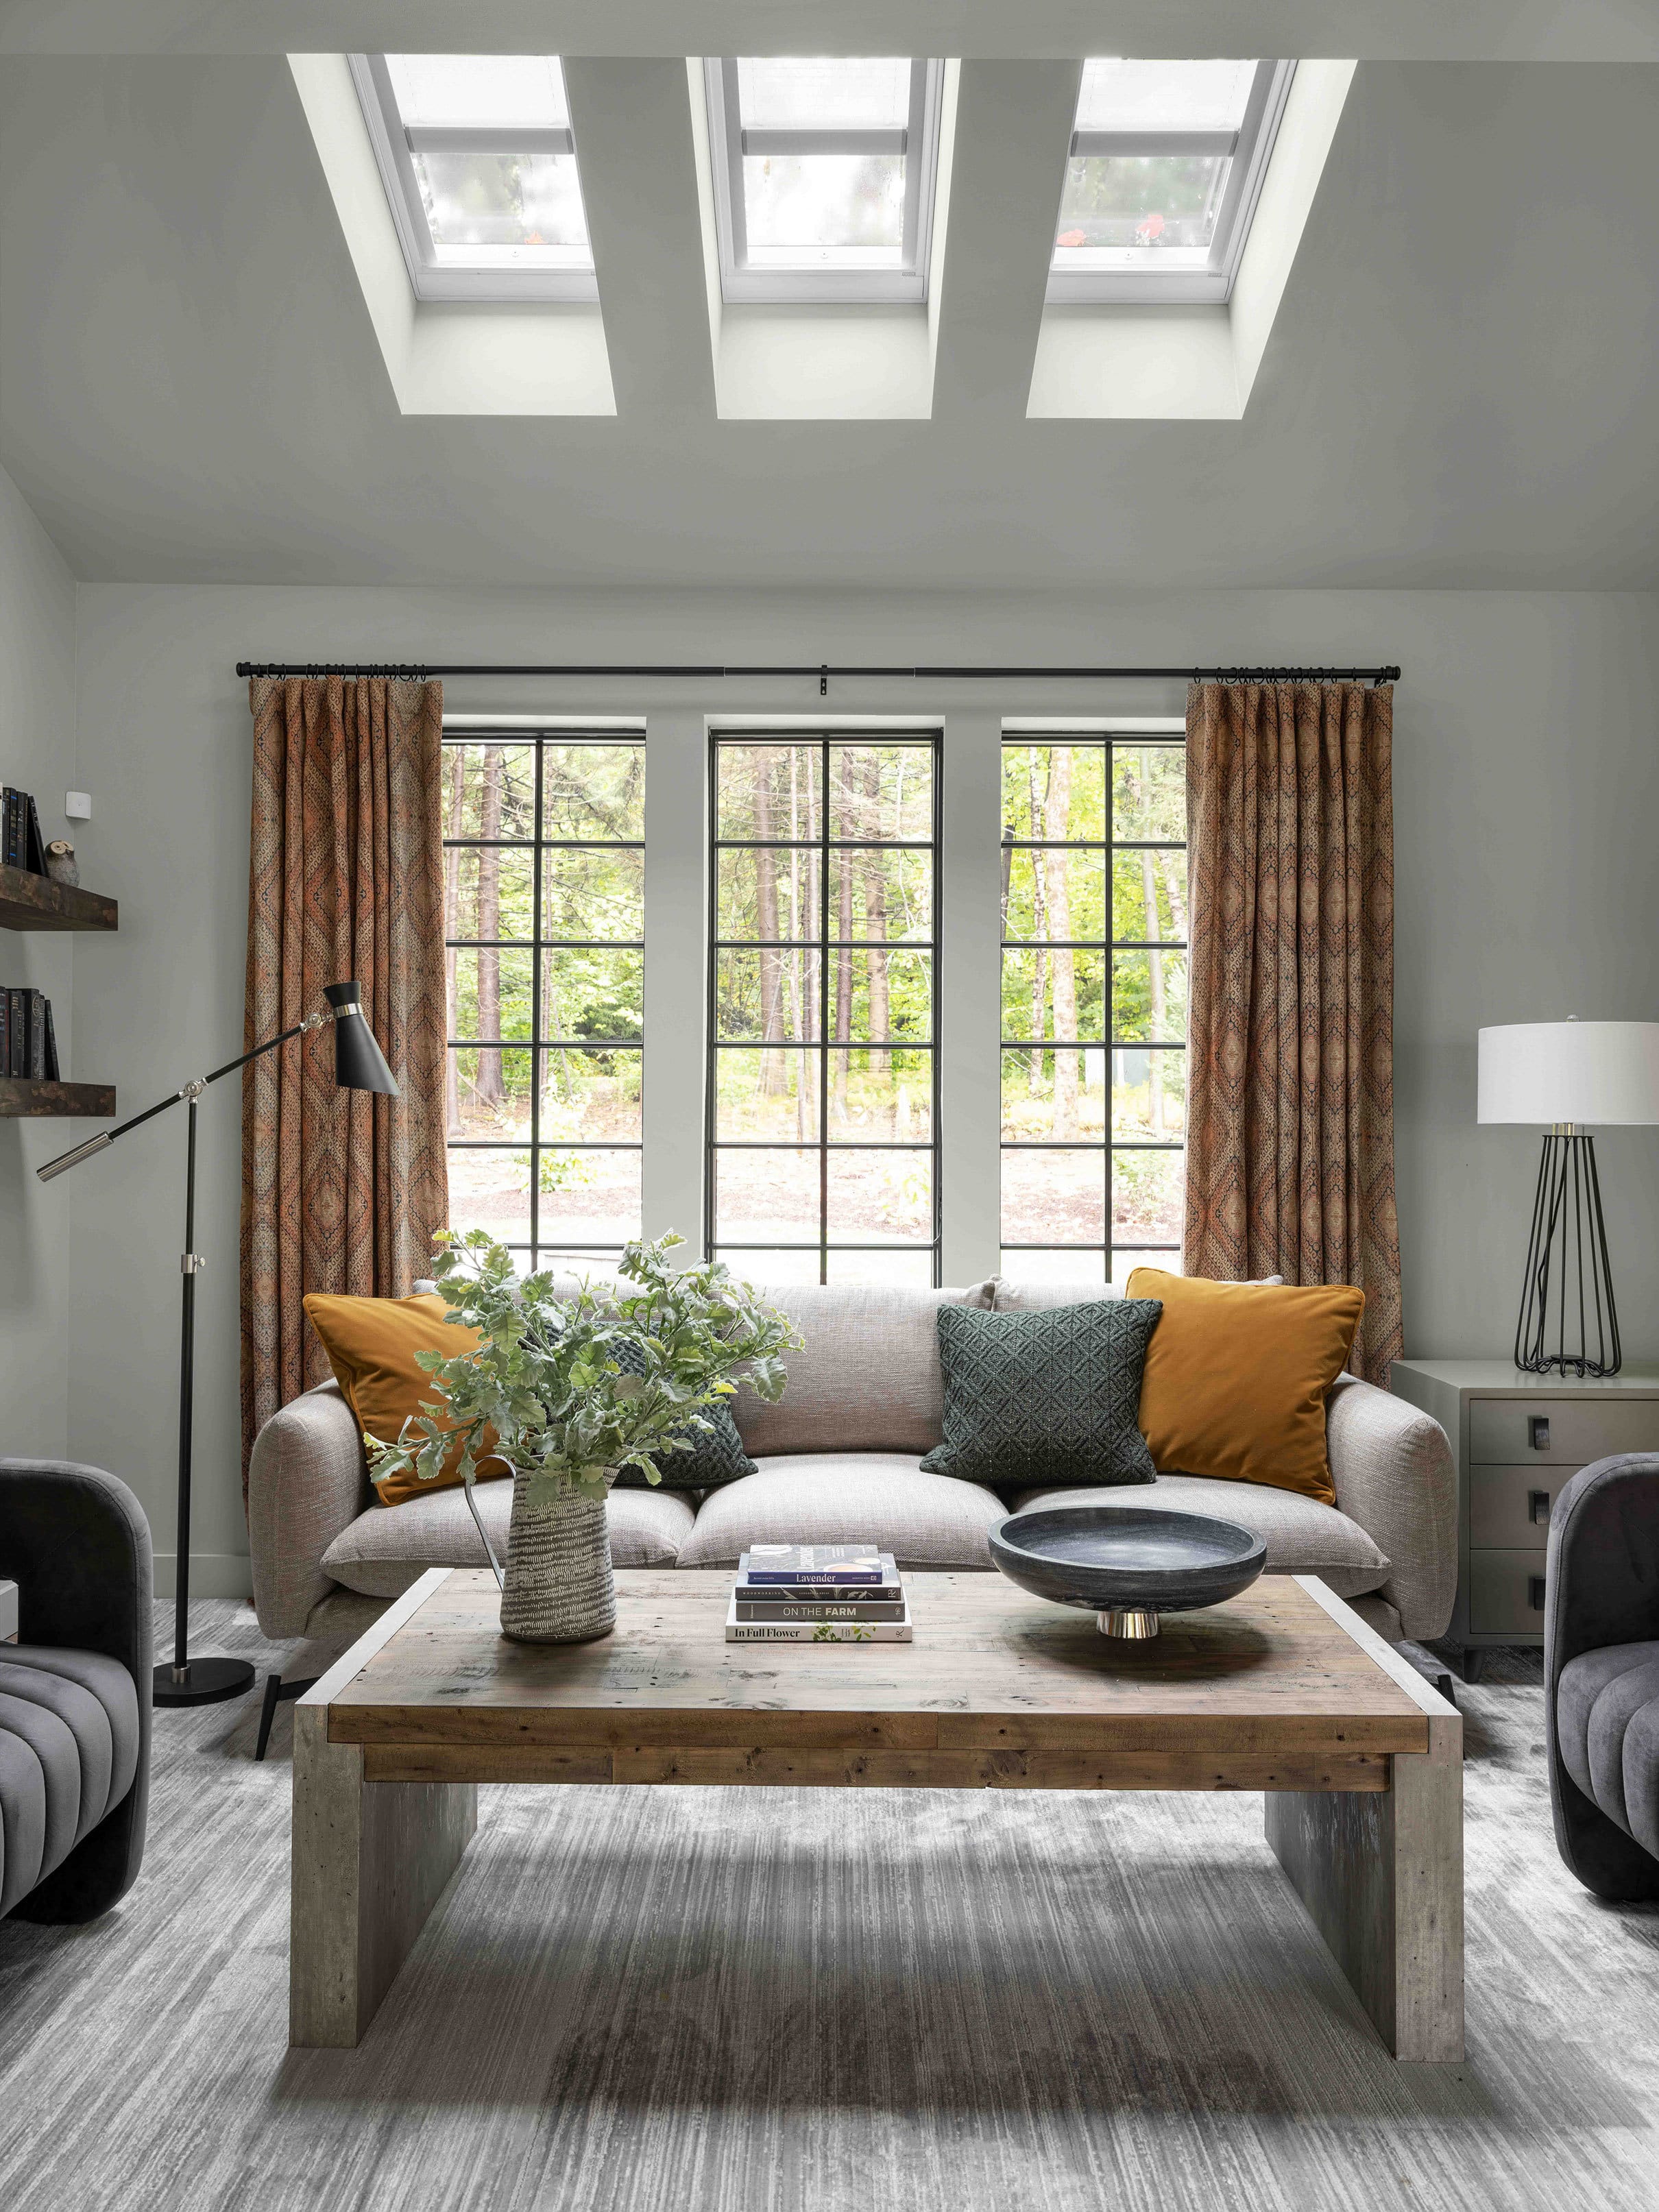 Living room skylights orange curtains gray rug